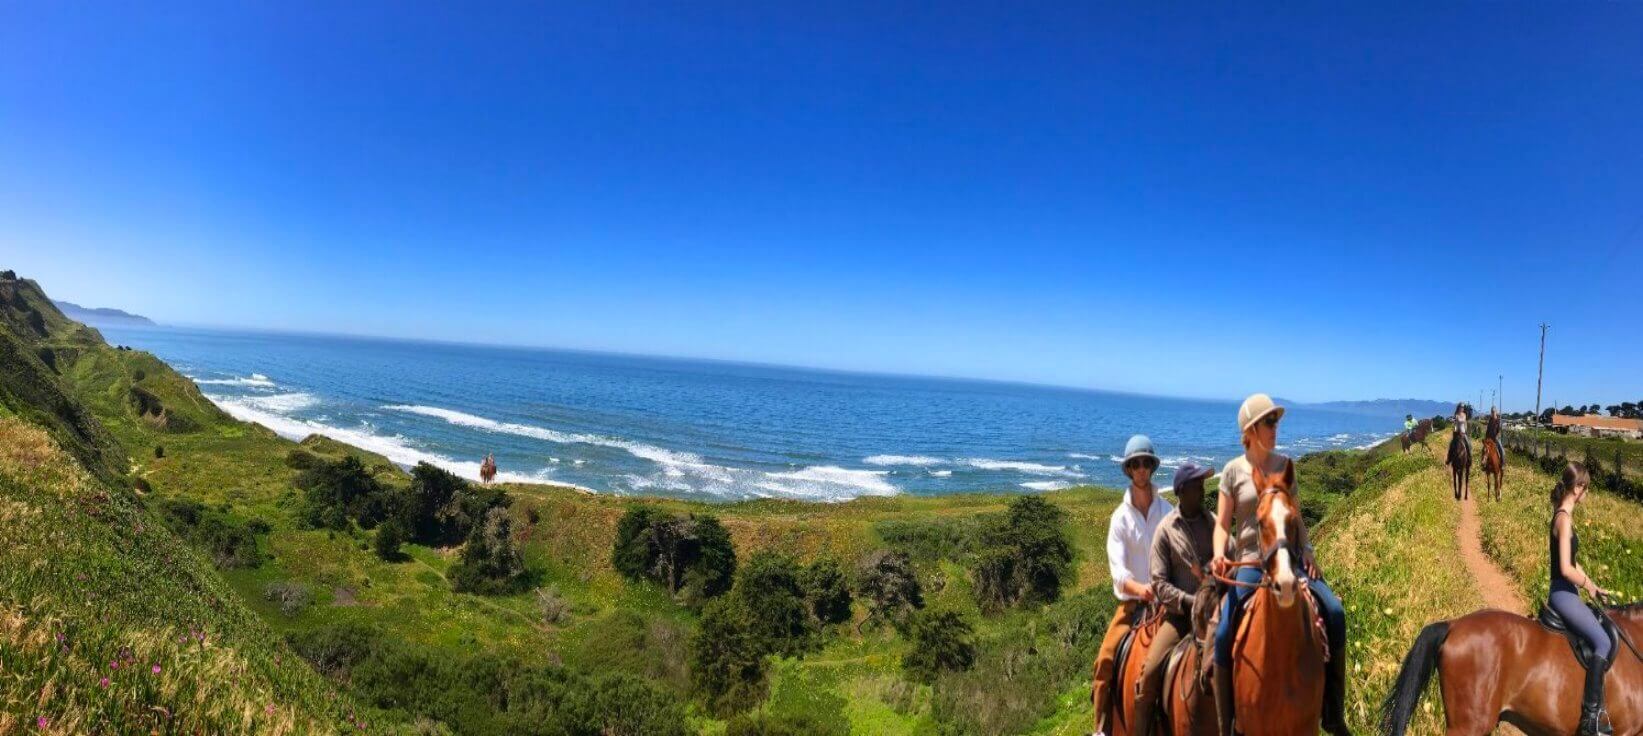 Horseback-Rides-on-The-Beach-_Neary-San-Francisco